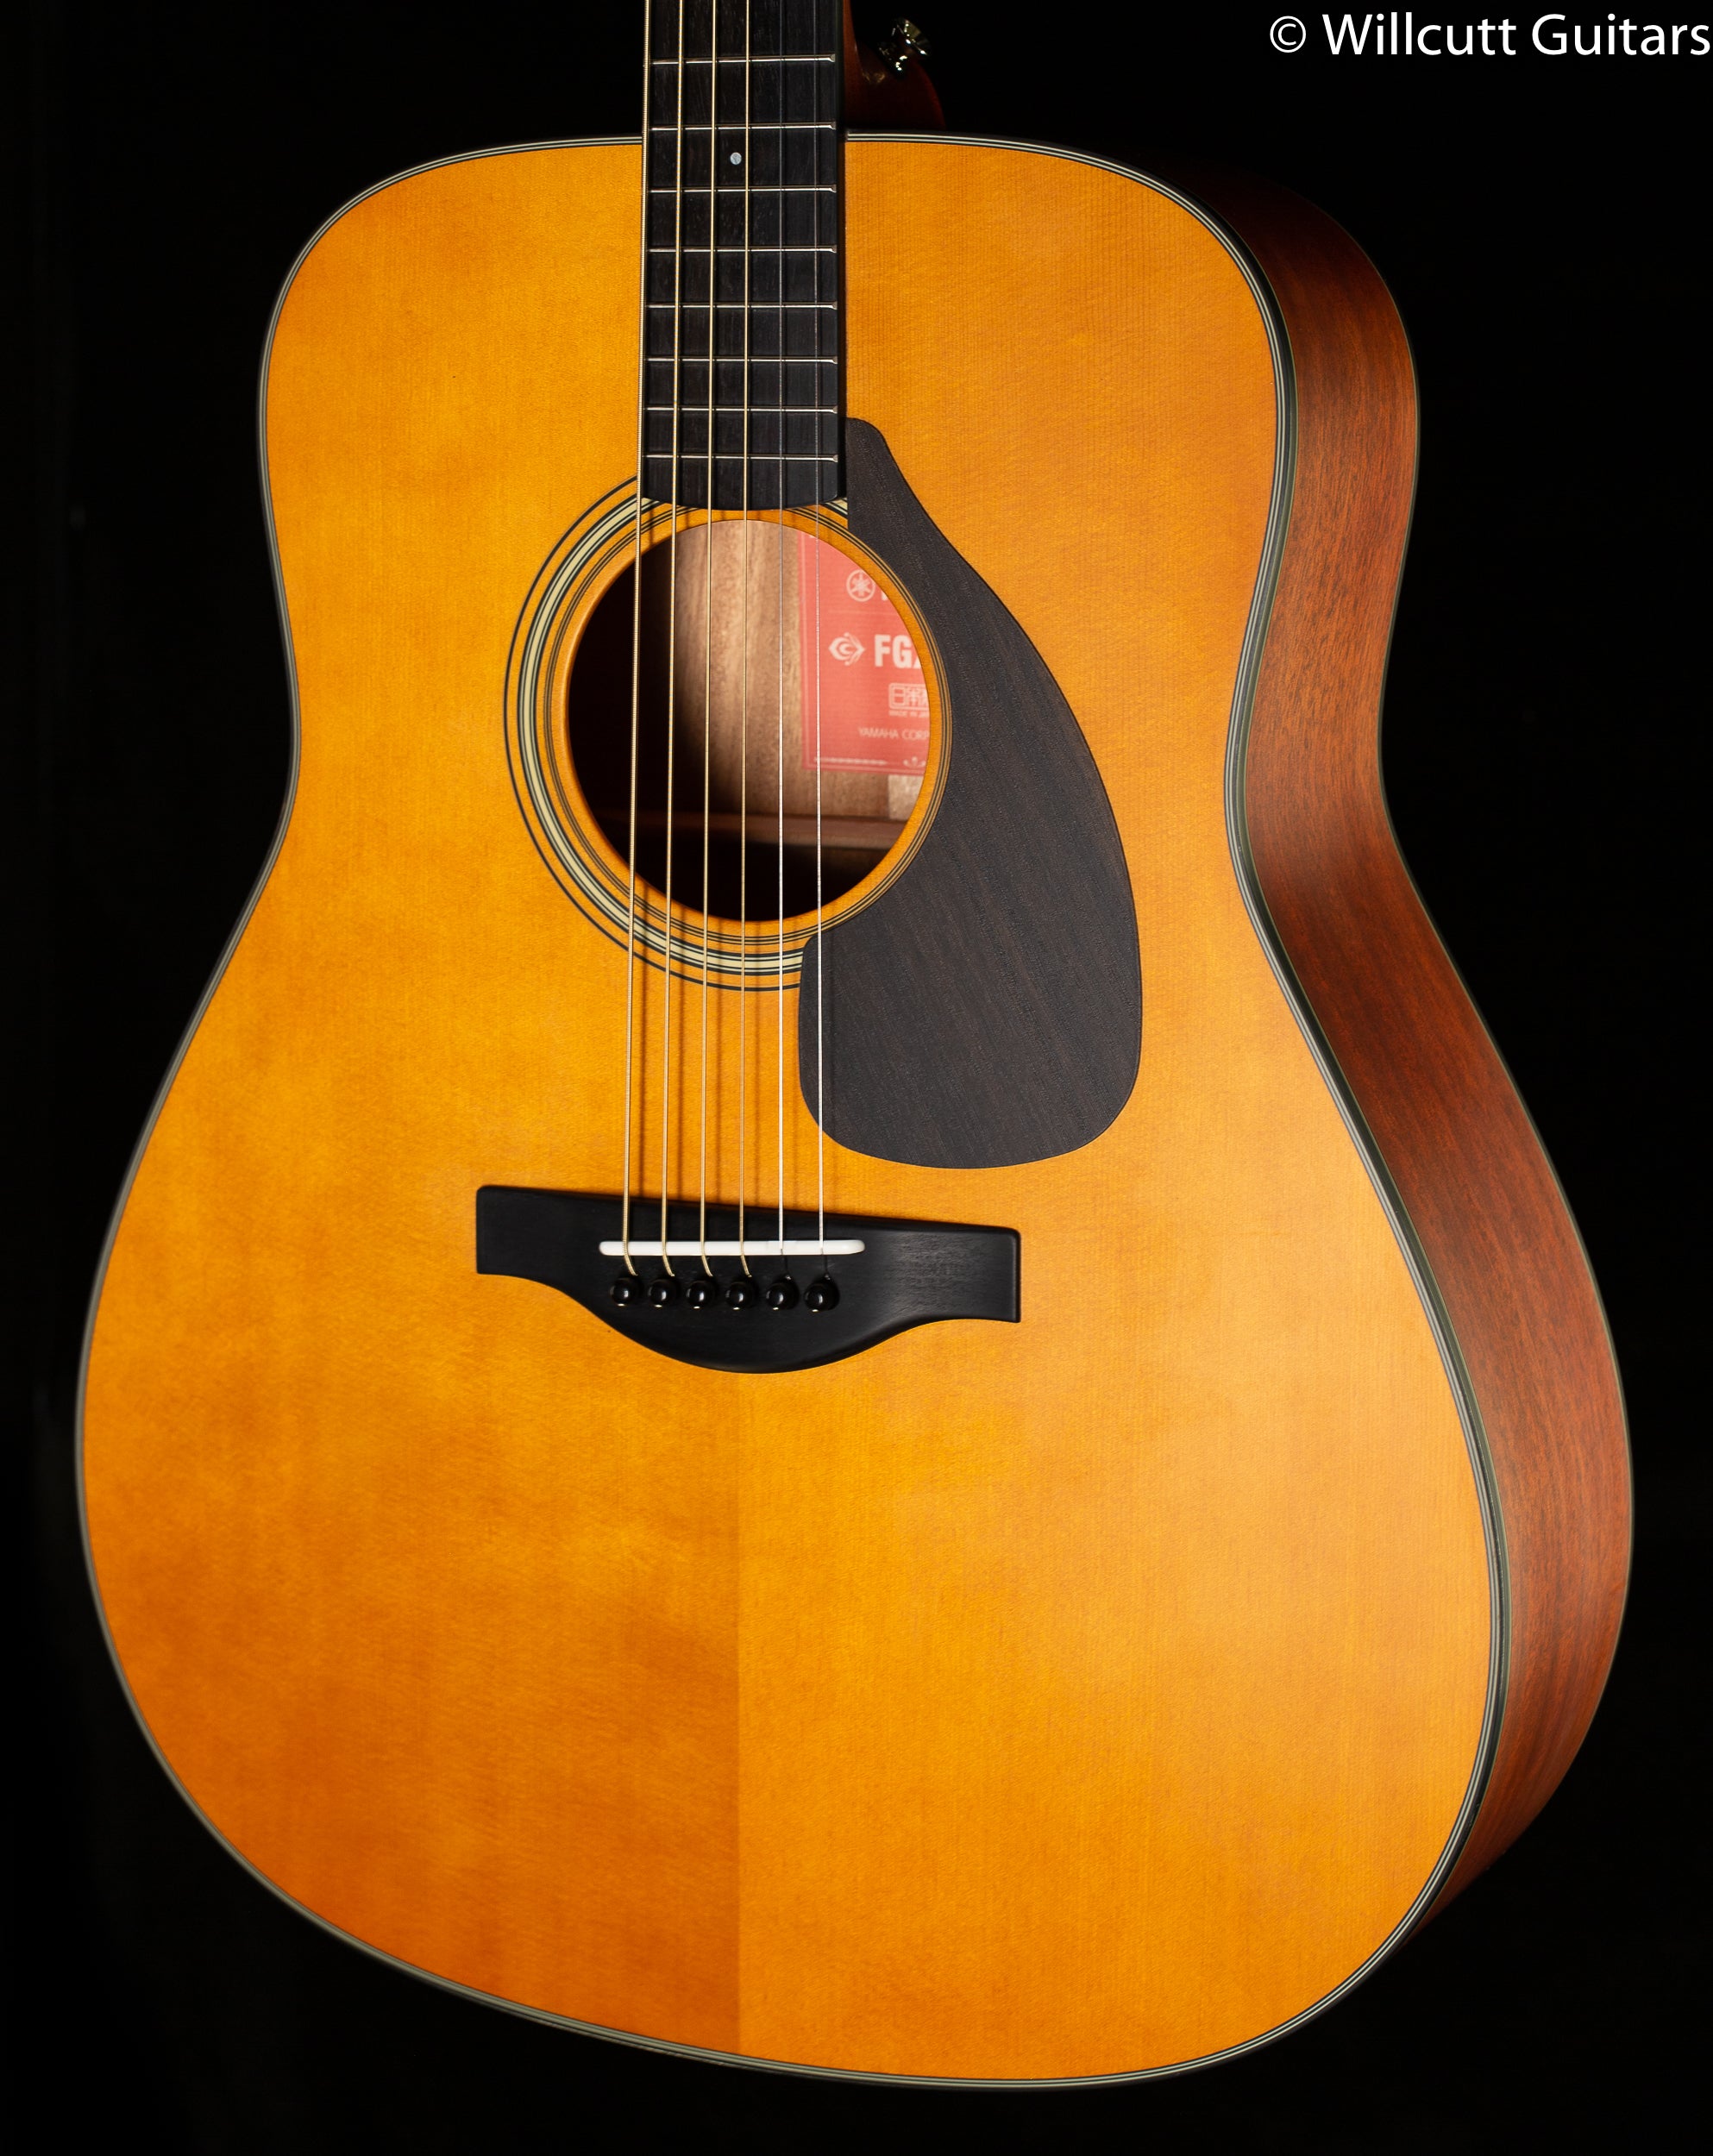 Yamaha FGX5 Red Label Guitar (02A) Willcutt Guitars